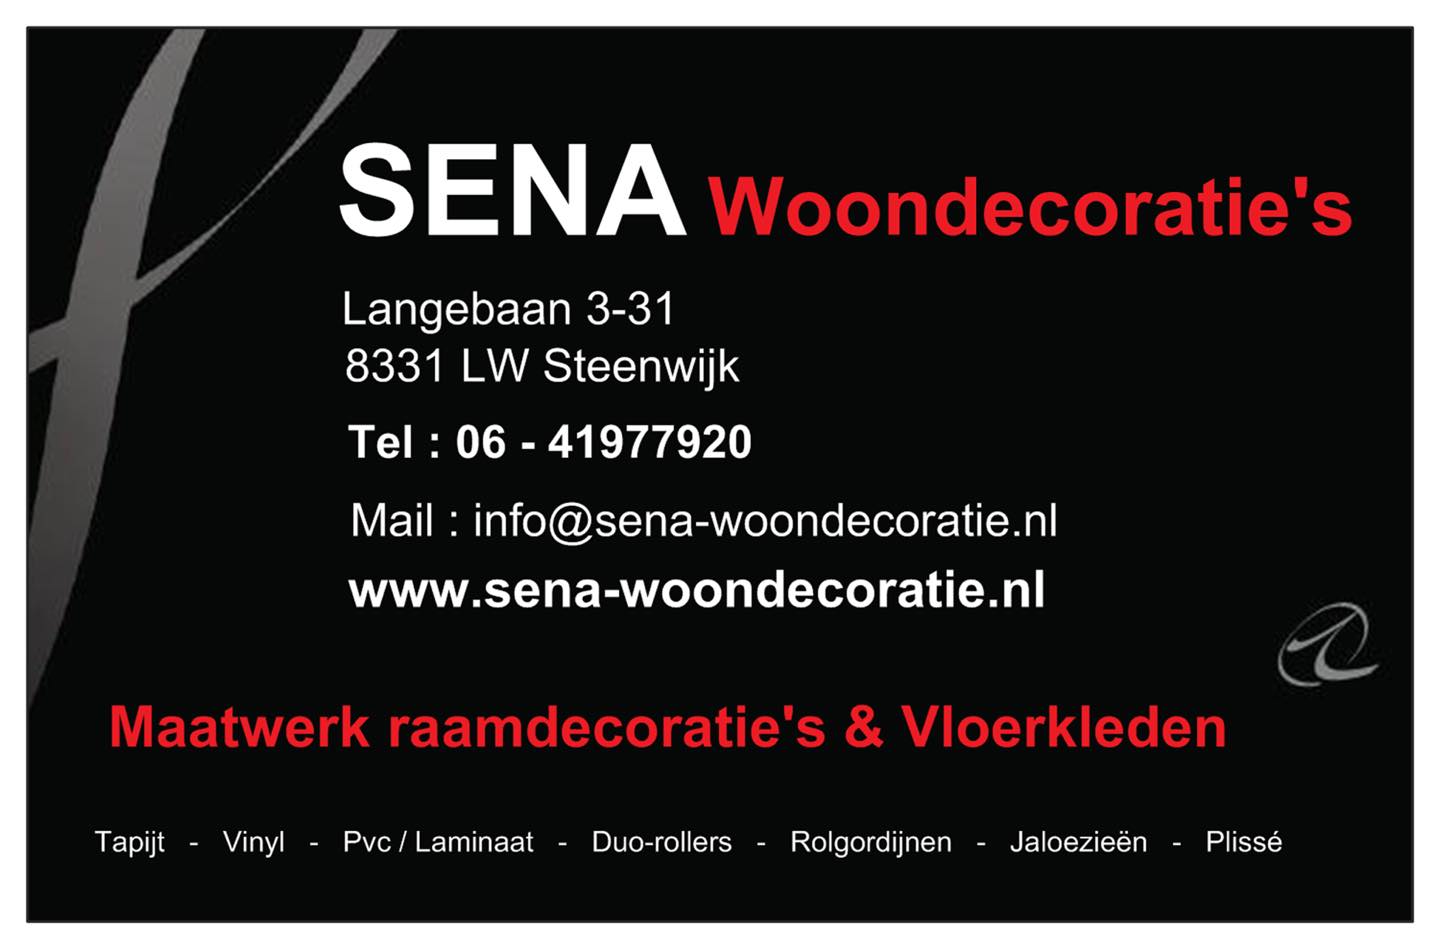 SENA Woondecoratie's